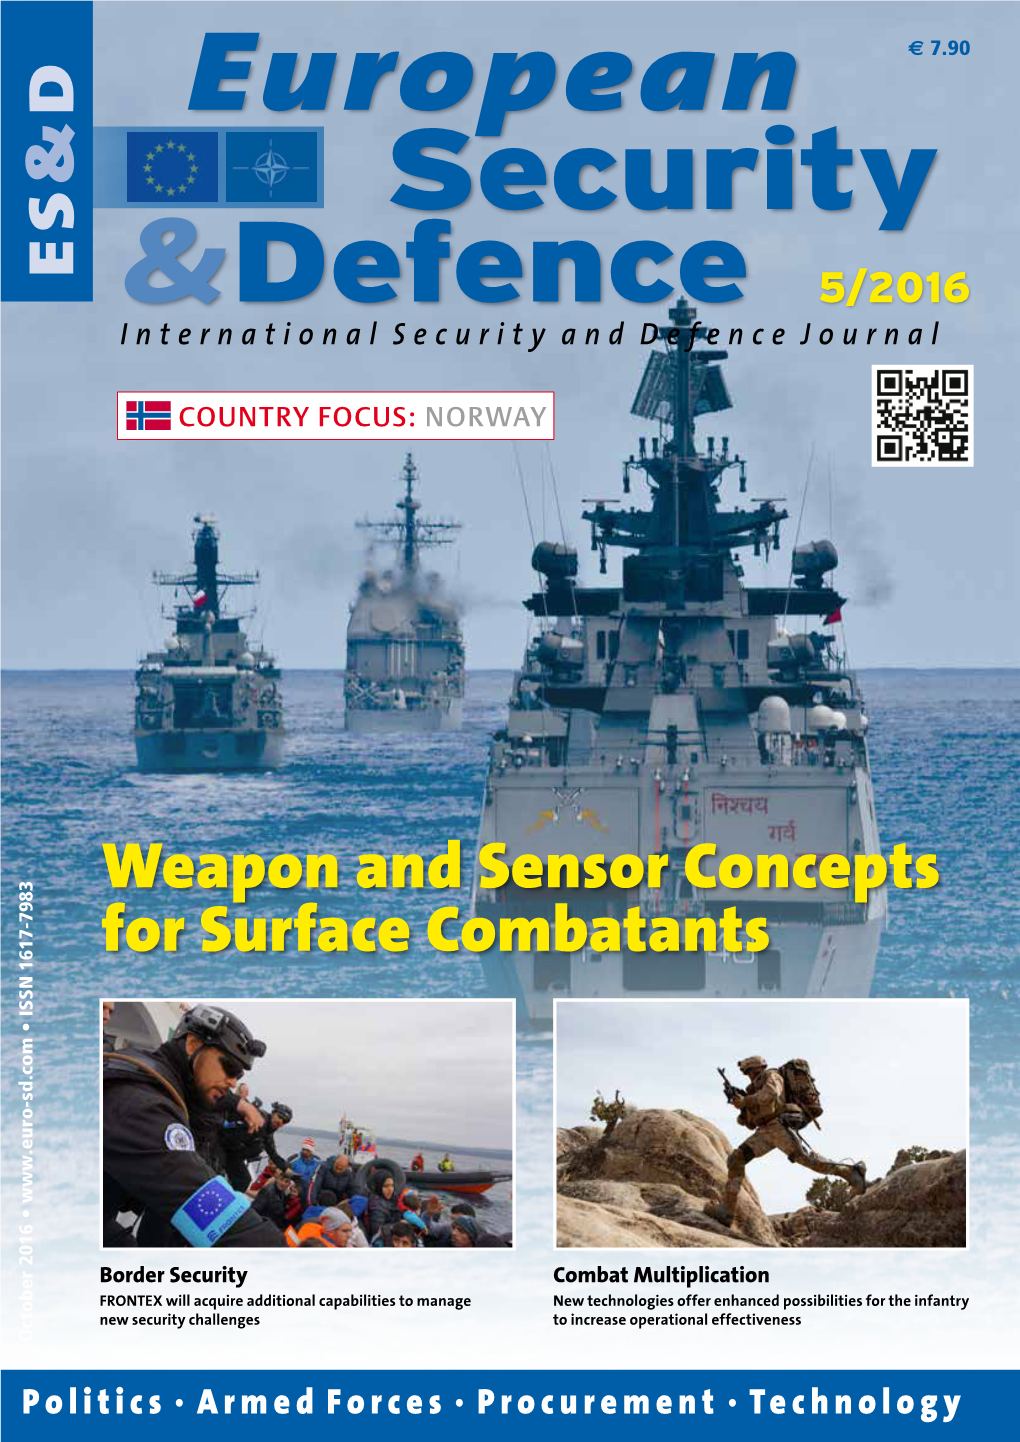 Security & Defence European